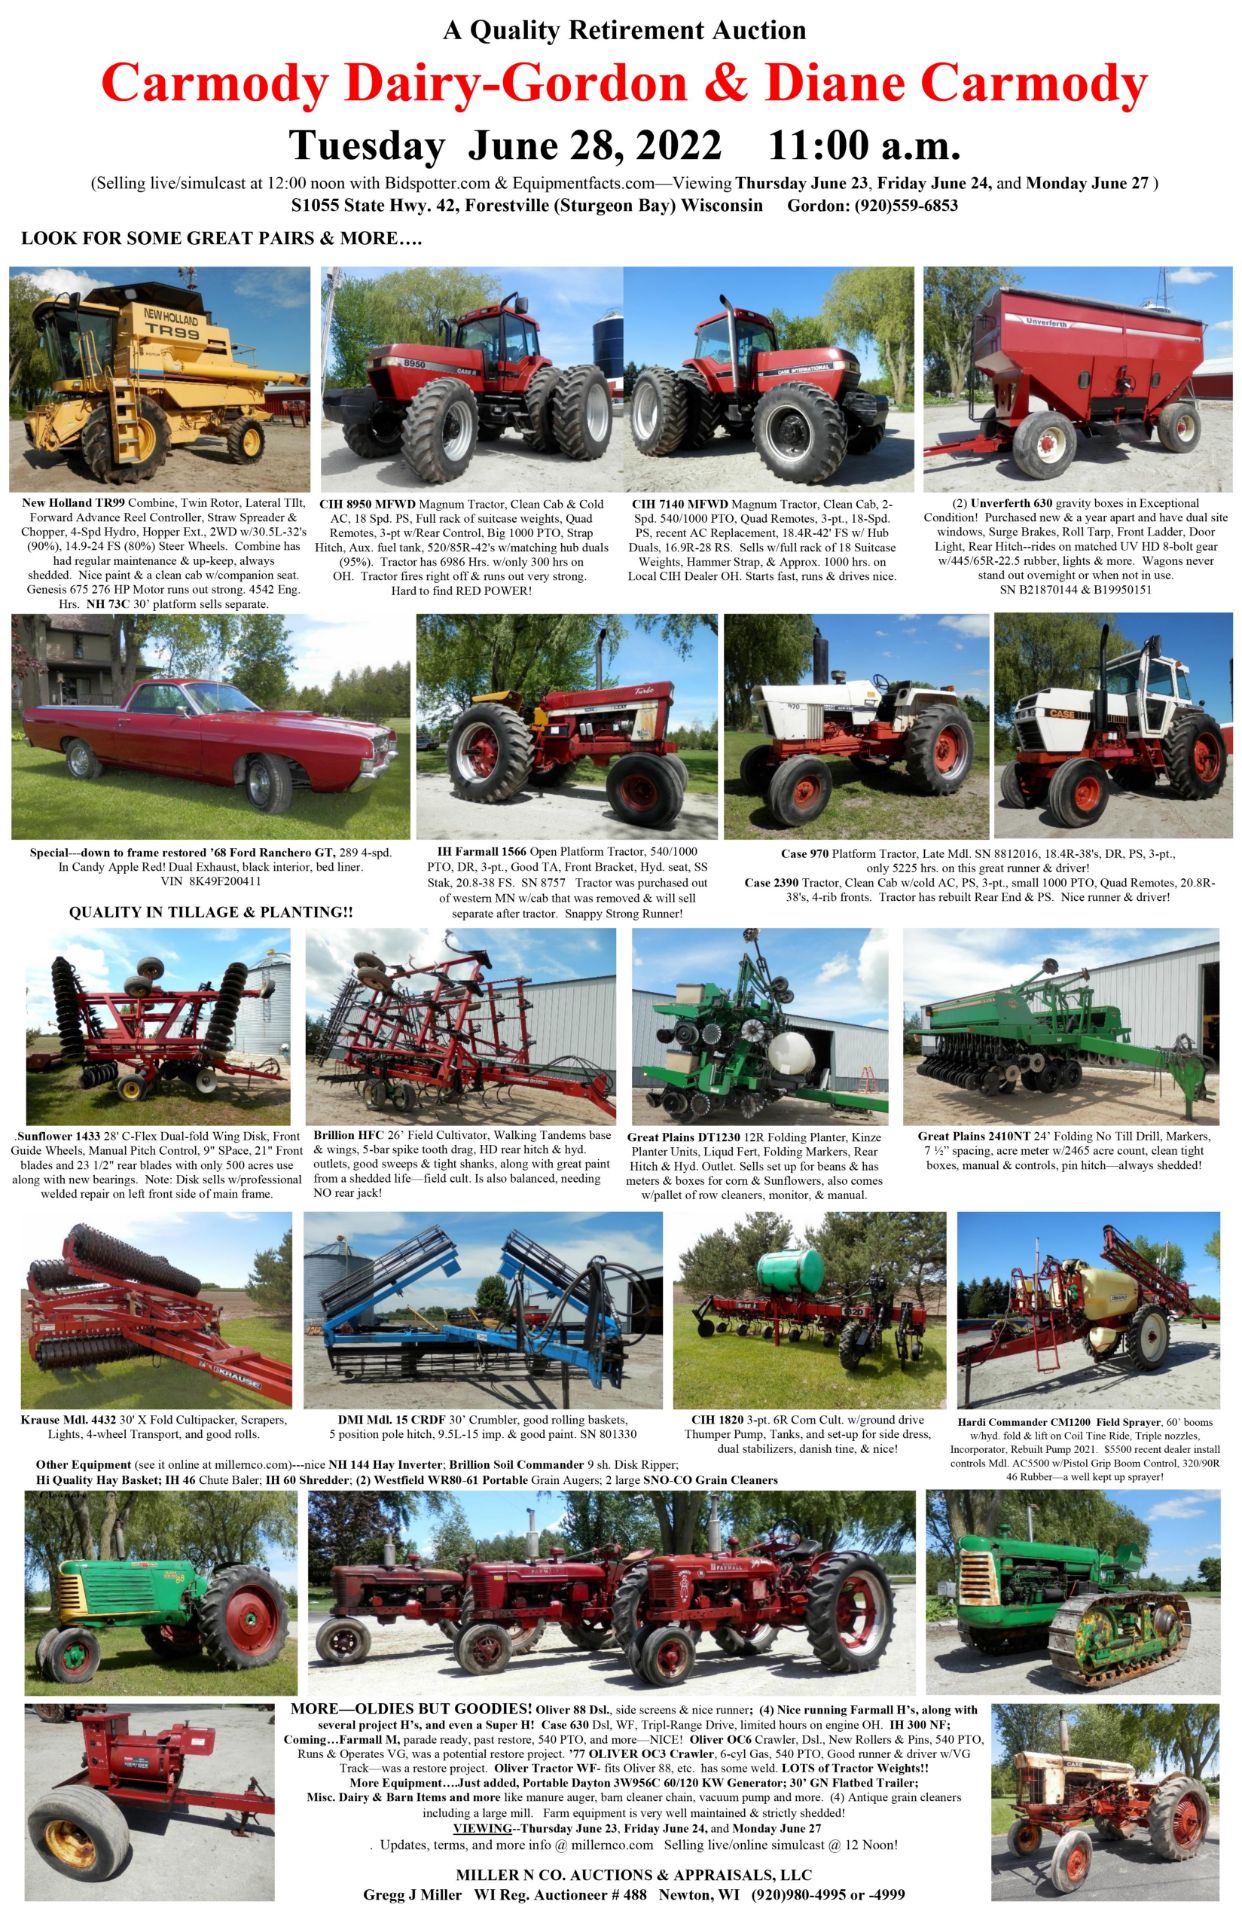 CIH 8950, CIH 7140, Case 970 & Case 2390 Tractors